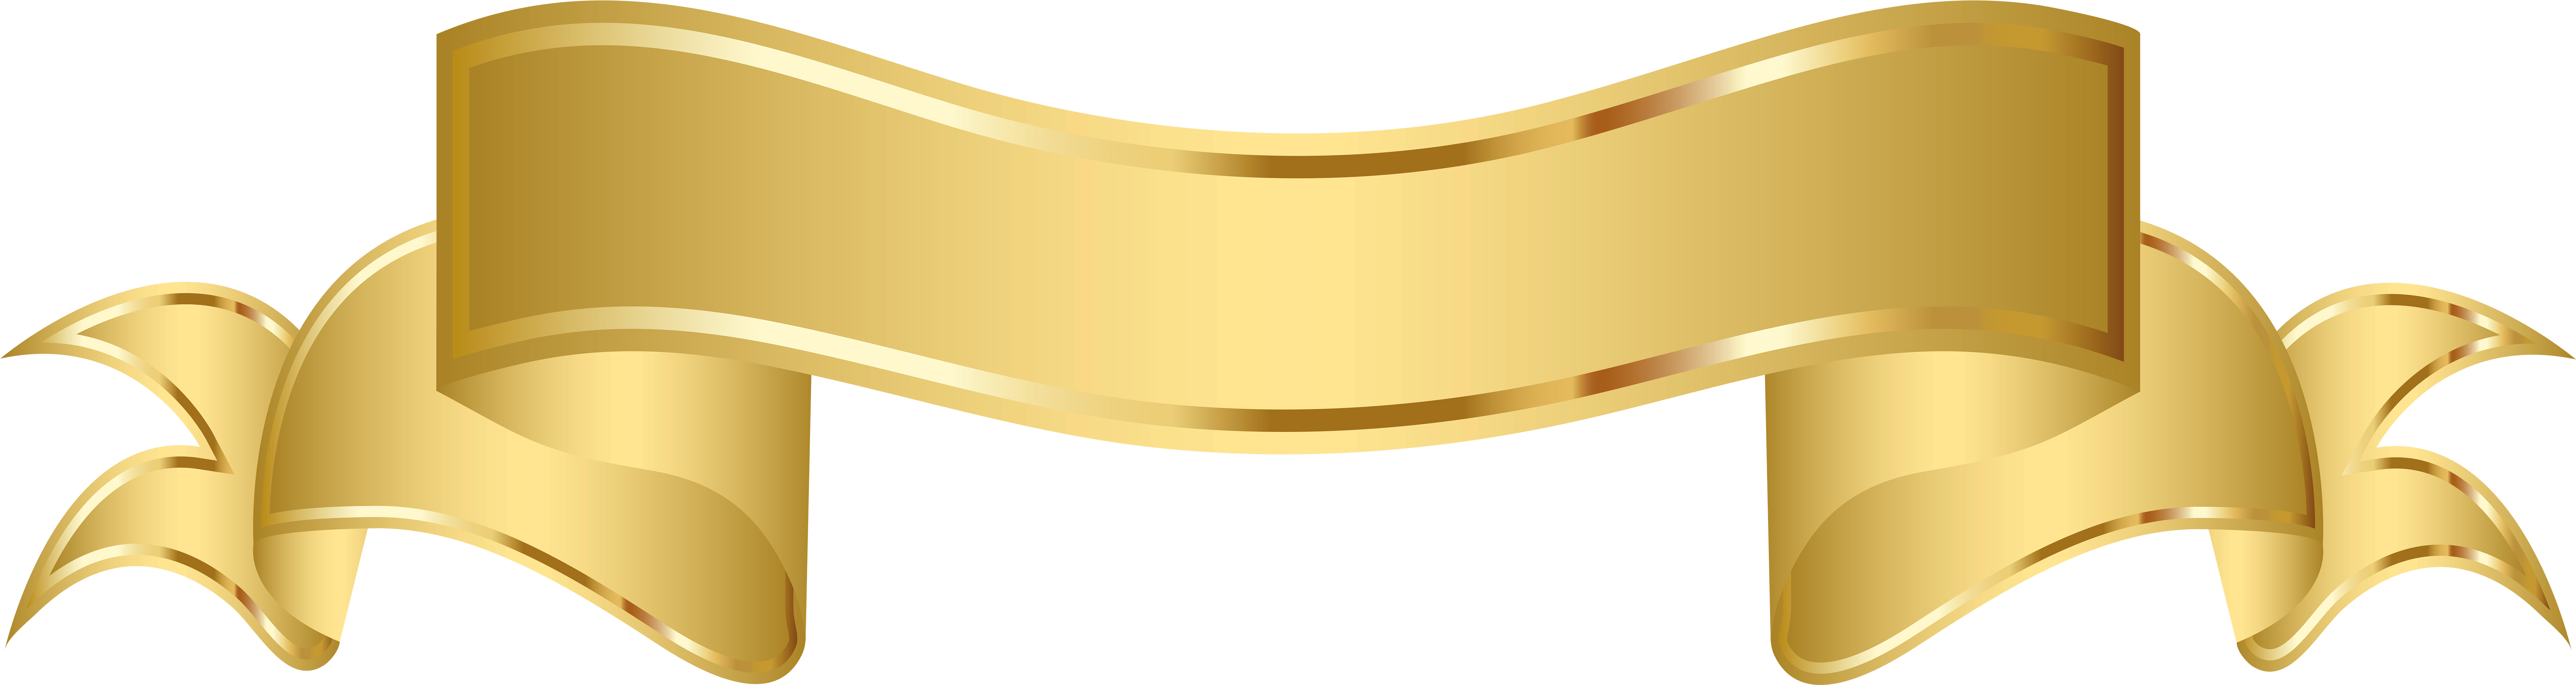 Лента золото для надписи на прозрачном фоне фото